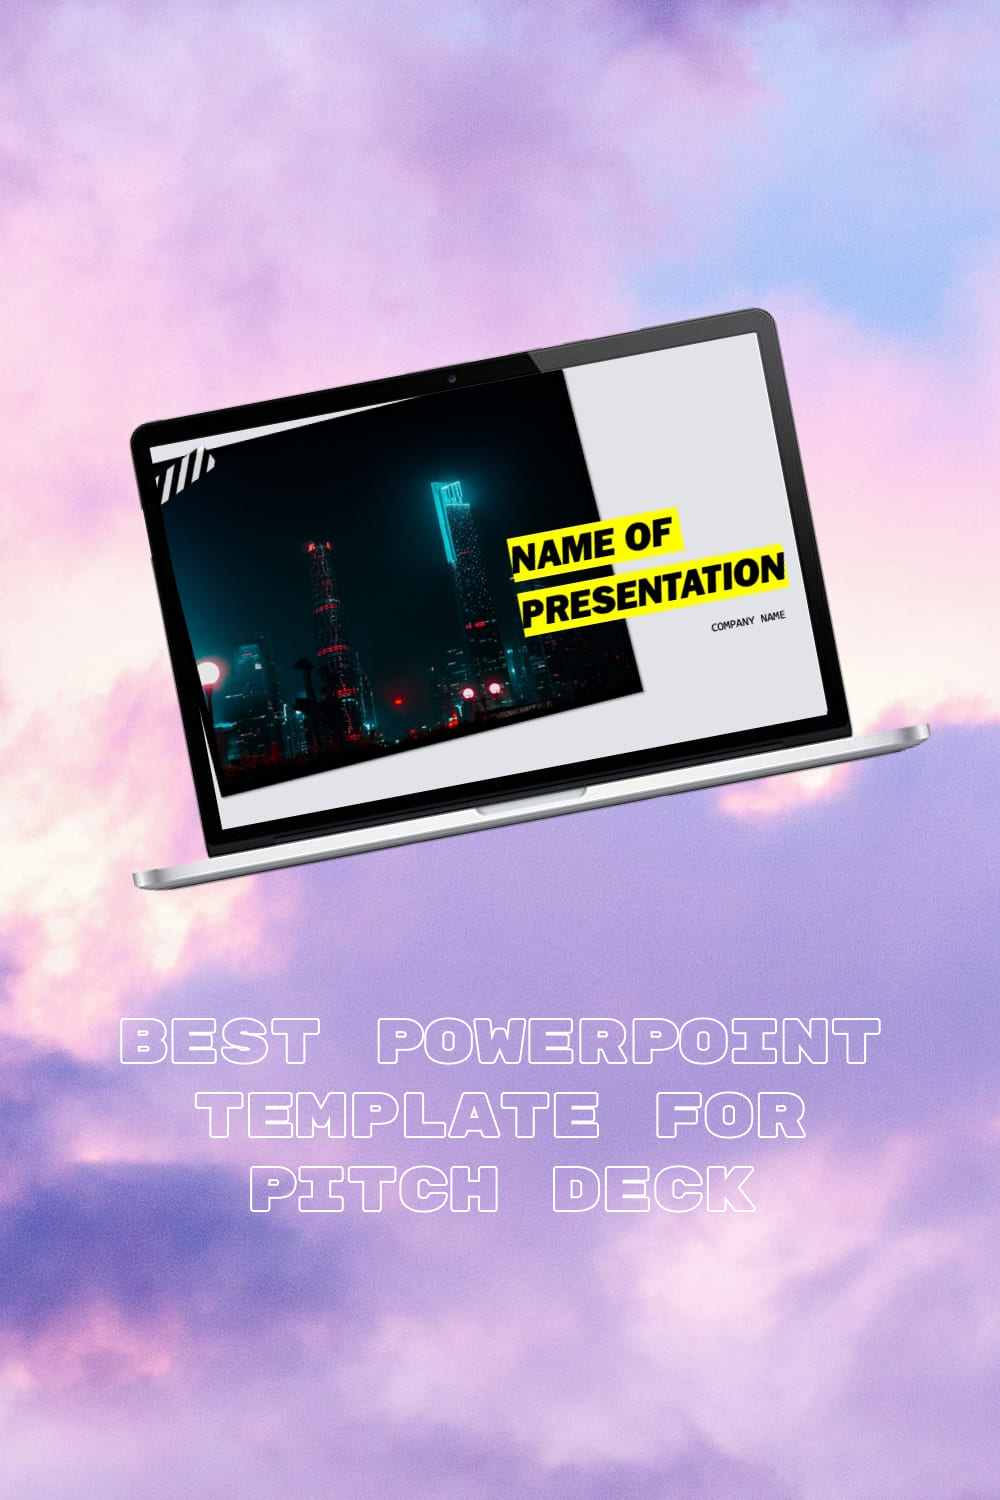 Pinterest Best Powerpoint Template For Pitch Deck.